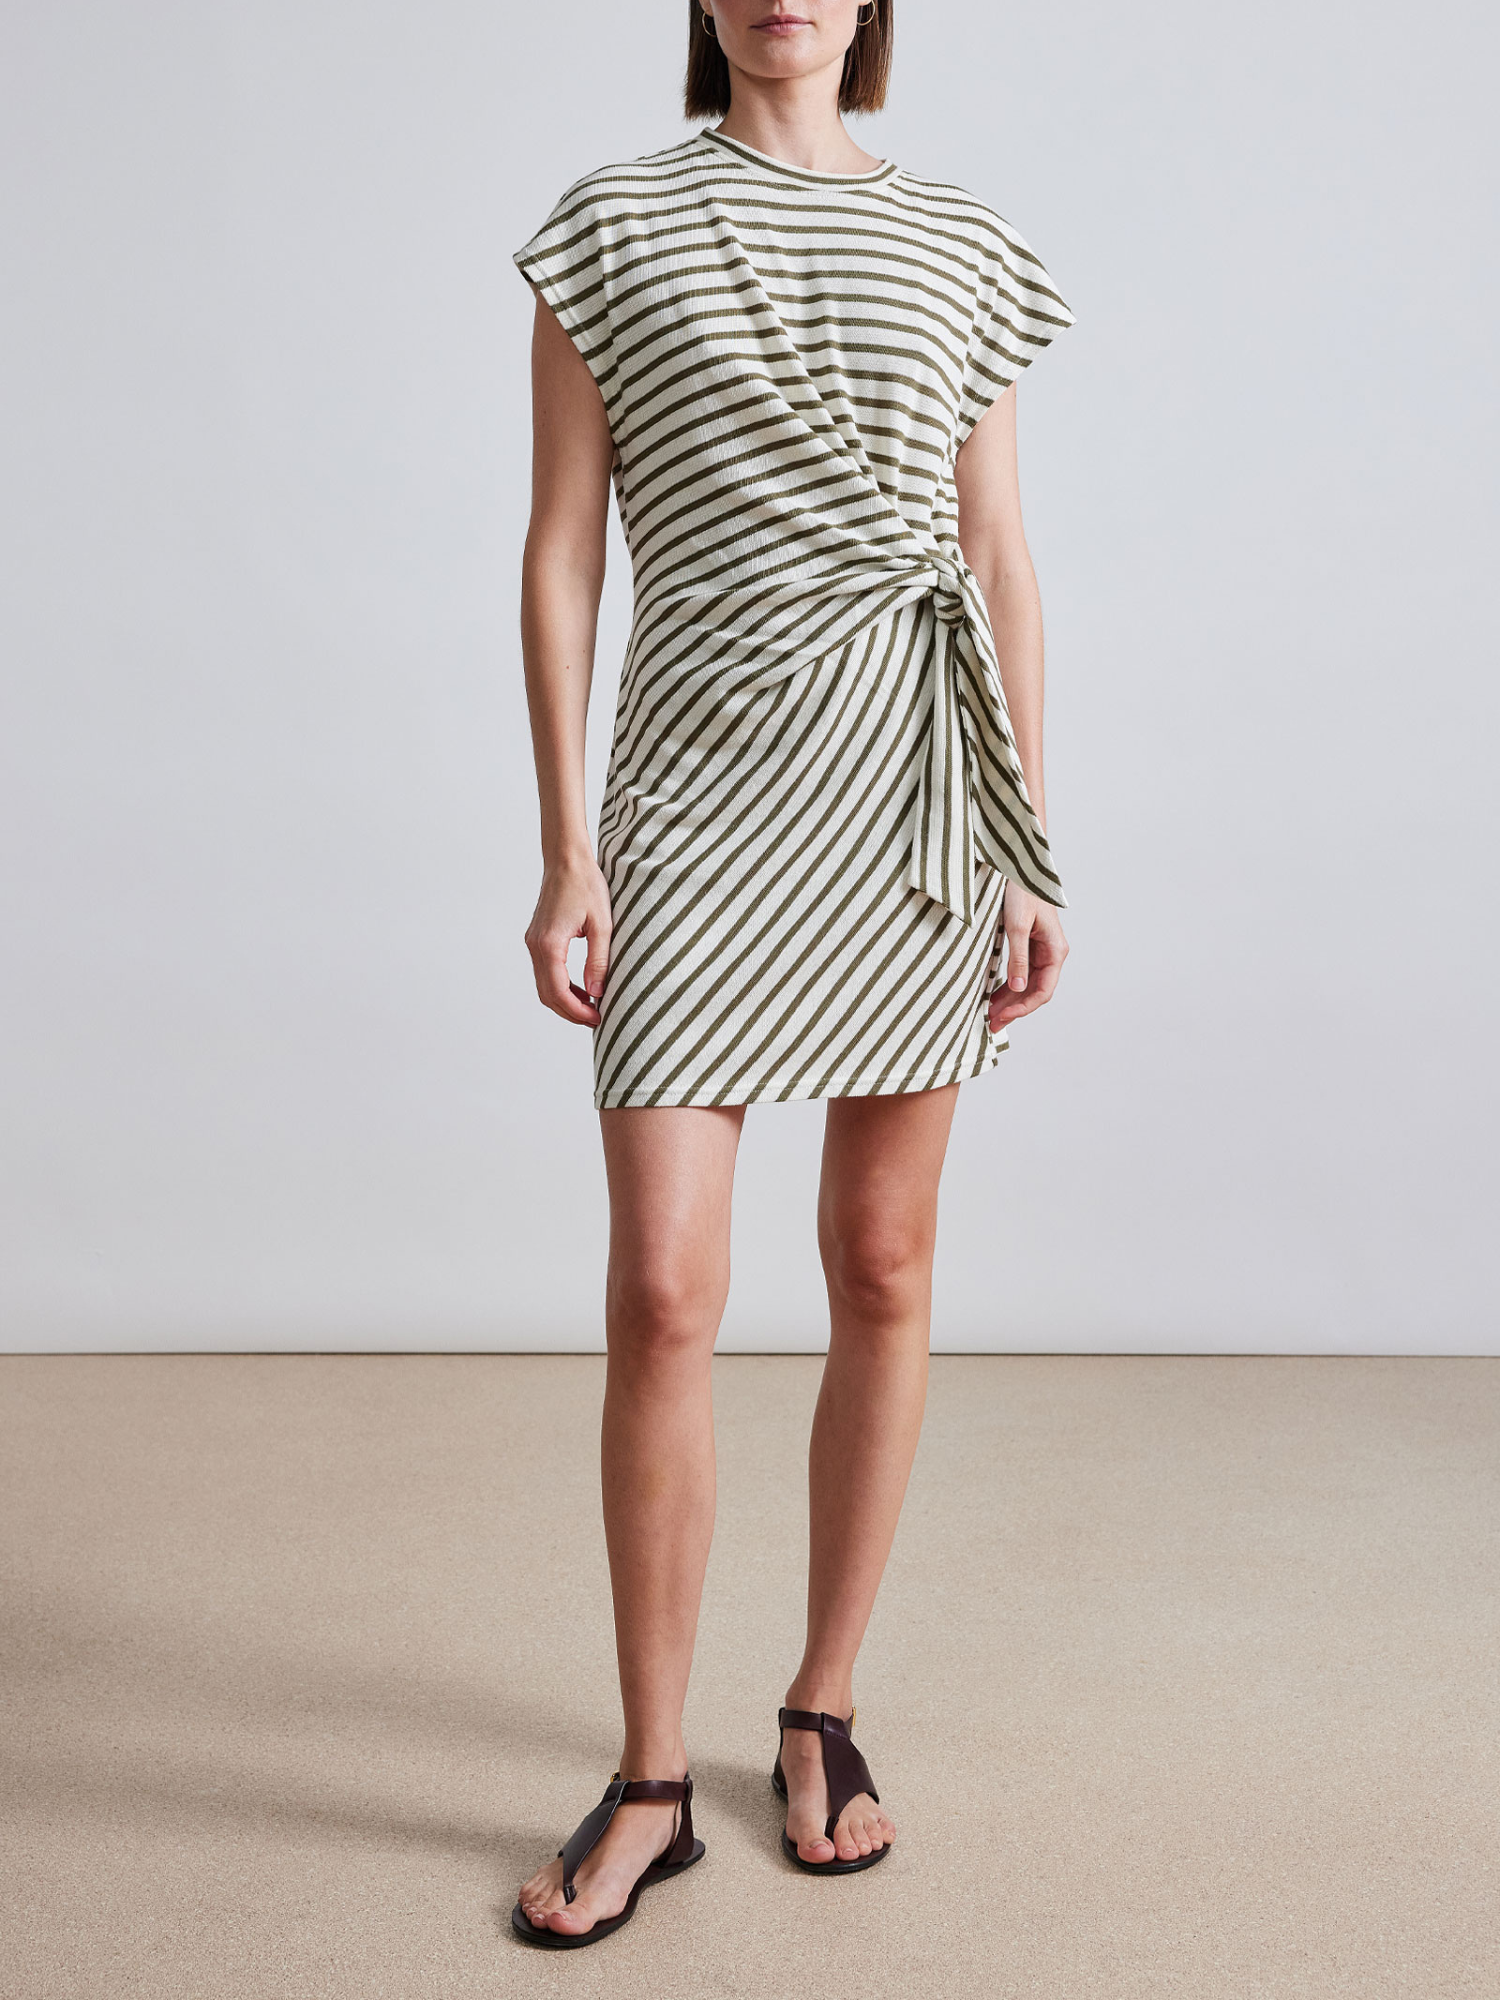 Apiece Apart Nina Cinched Mini Dress in Cream and Olive Stripe